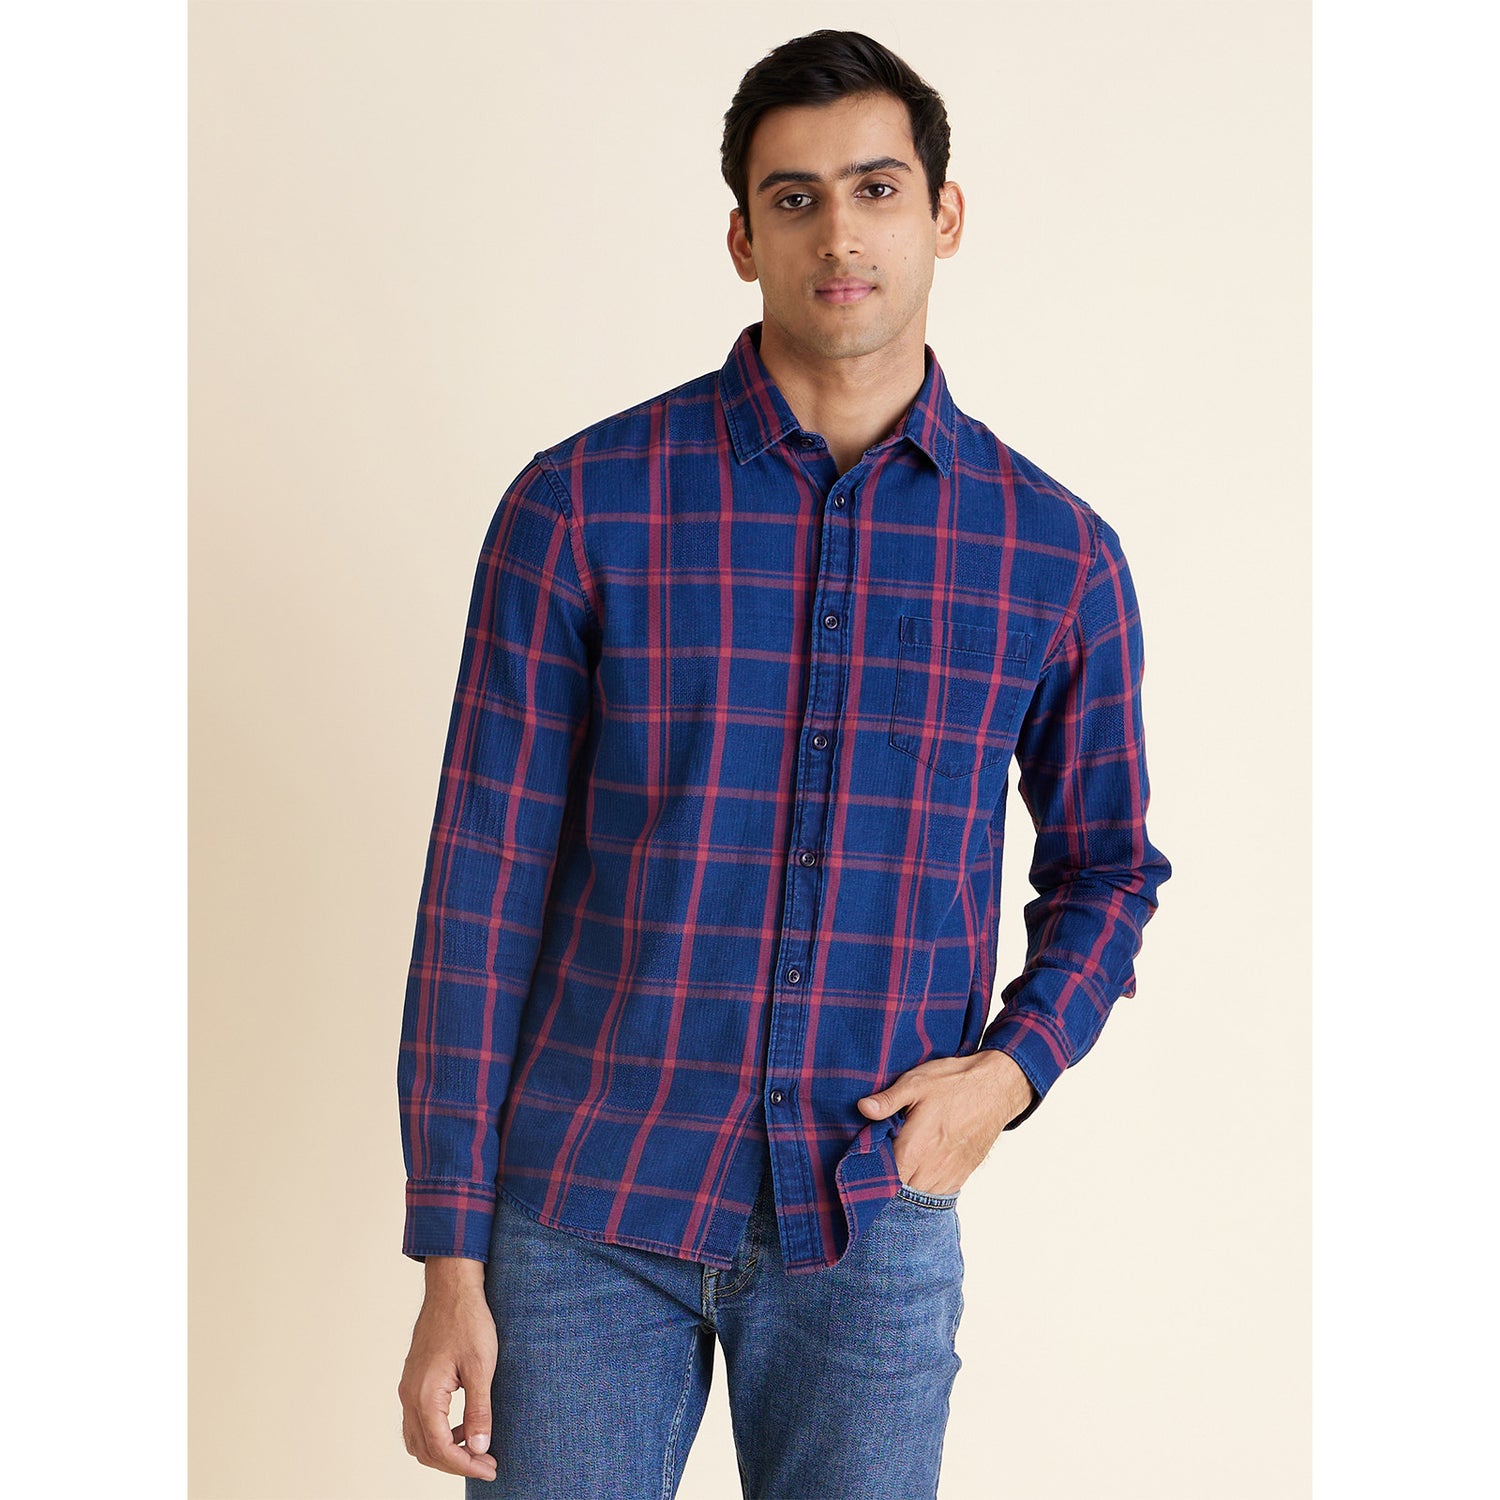 Red Classic Tartan Checks Checked Cotton Casual Shirt (DAIND4)